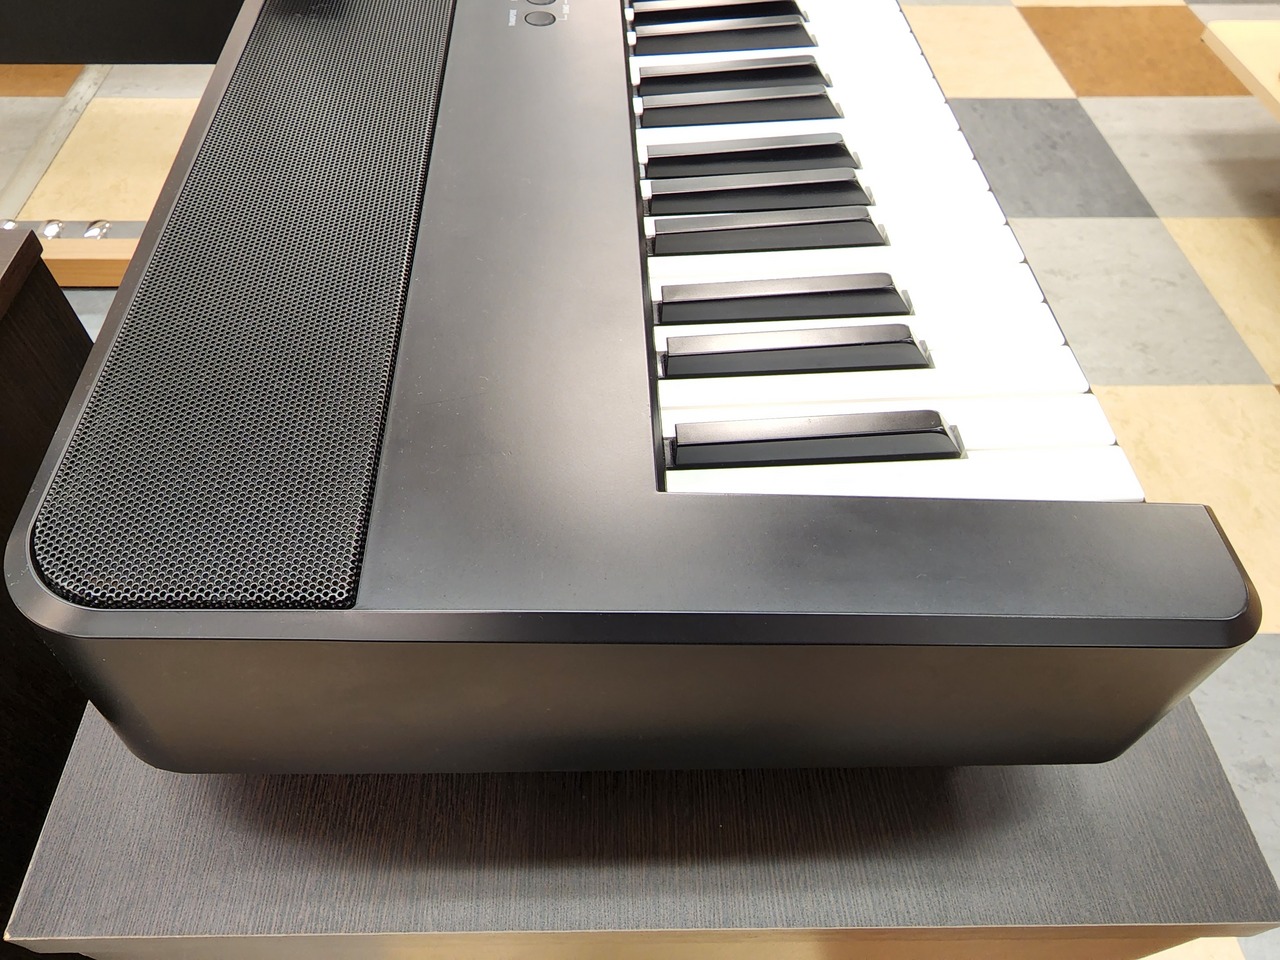 KAWAI ES920B (ブラック) ポータブル電子ピアノ（新品特価/送料無料